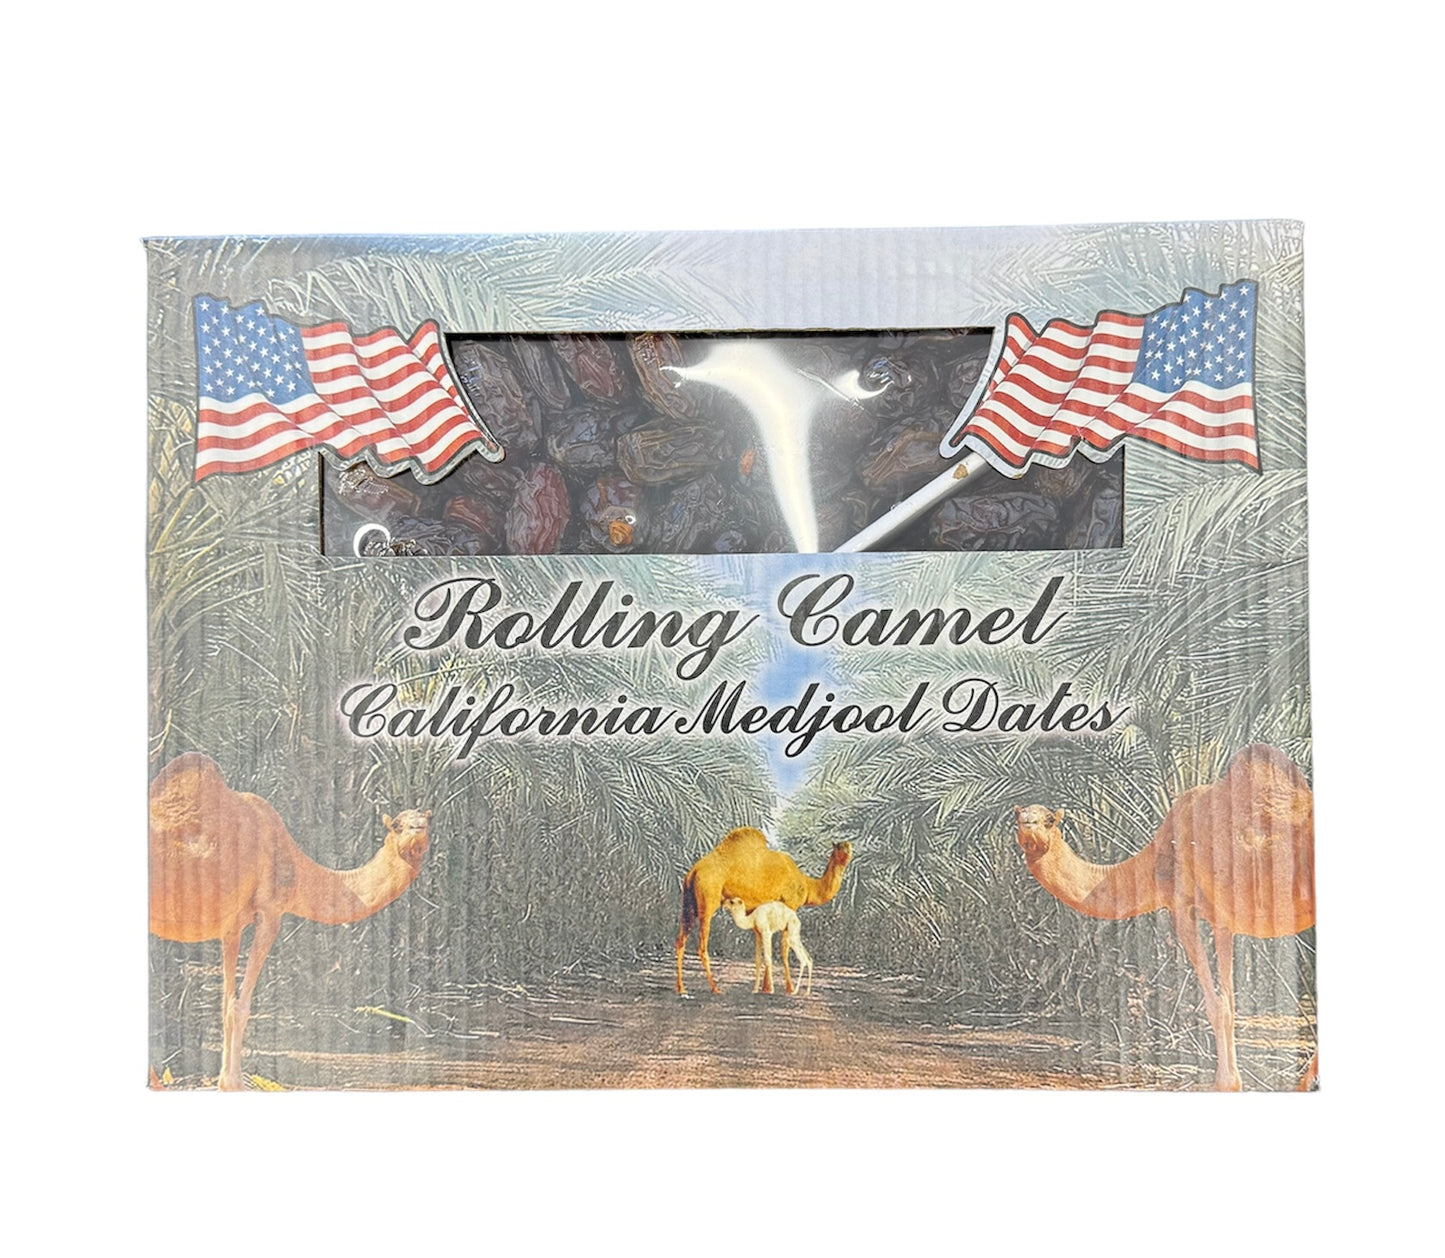 Rolling Camel California Medjool Dates 11lbs